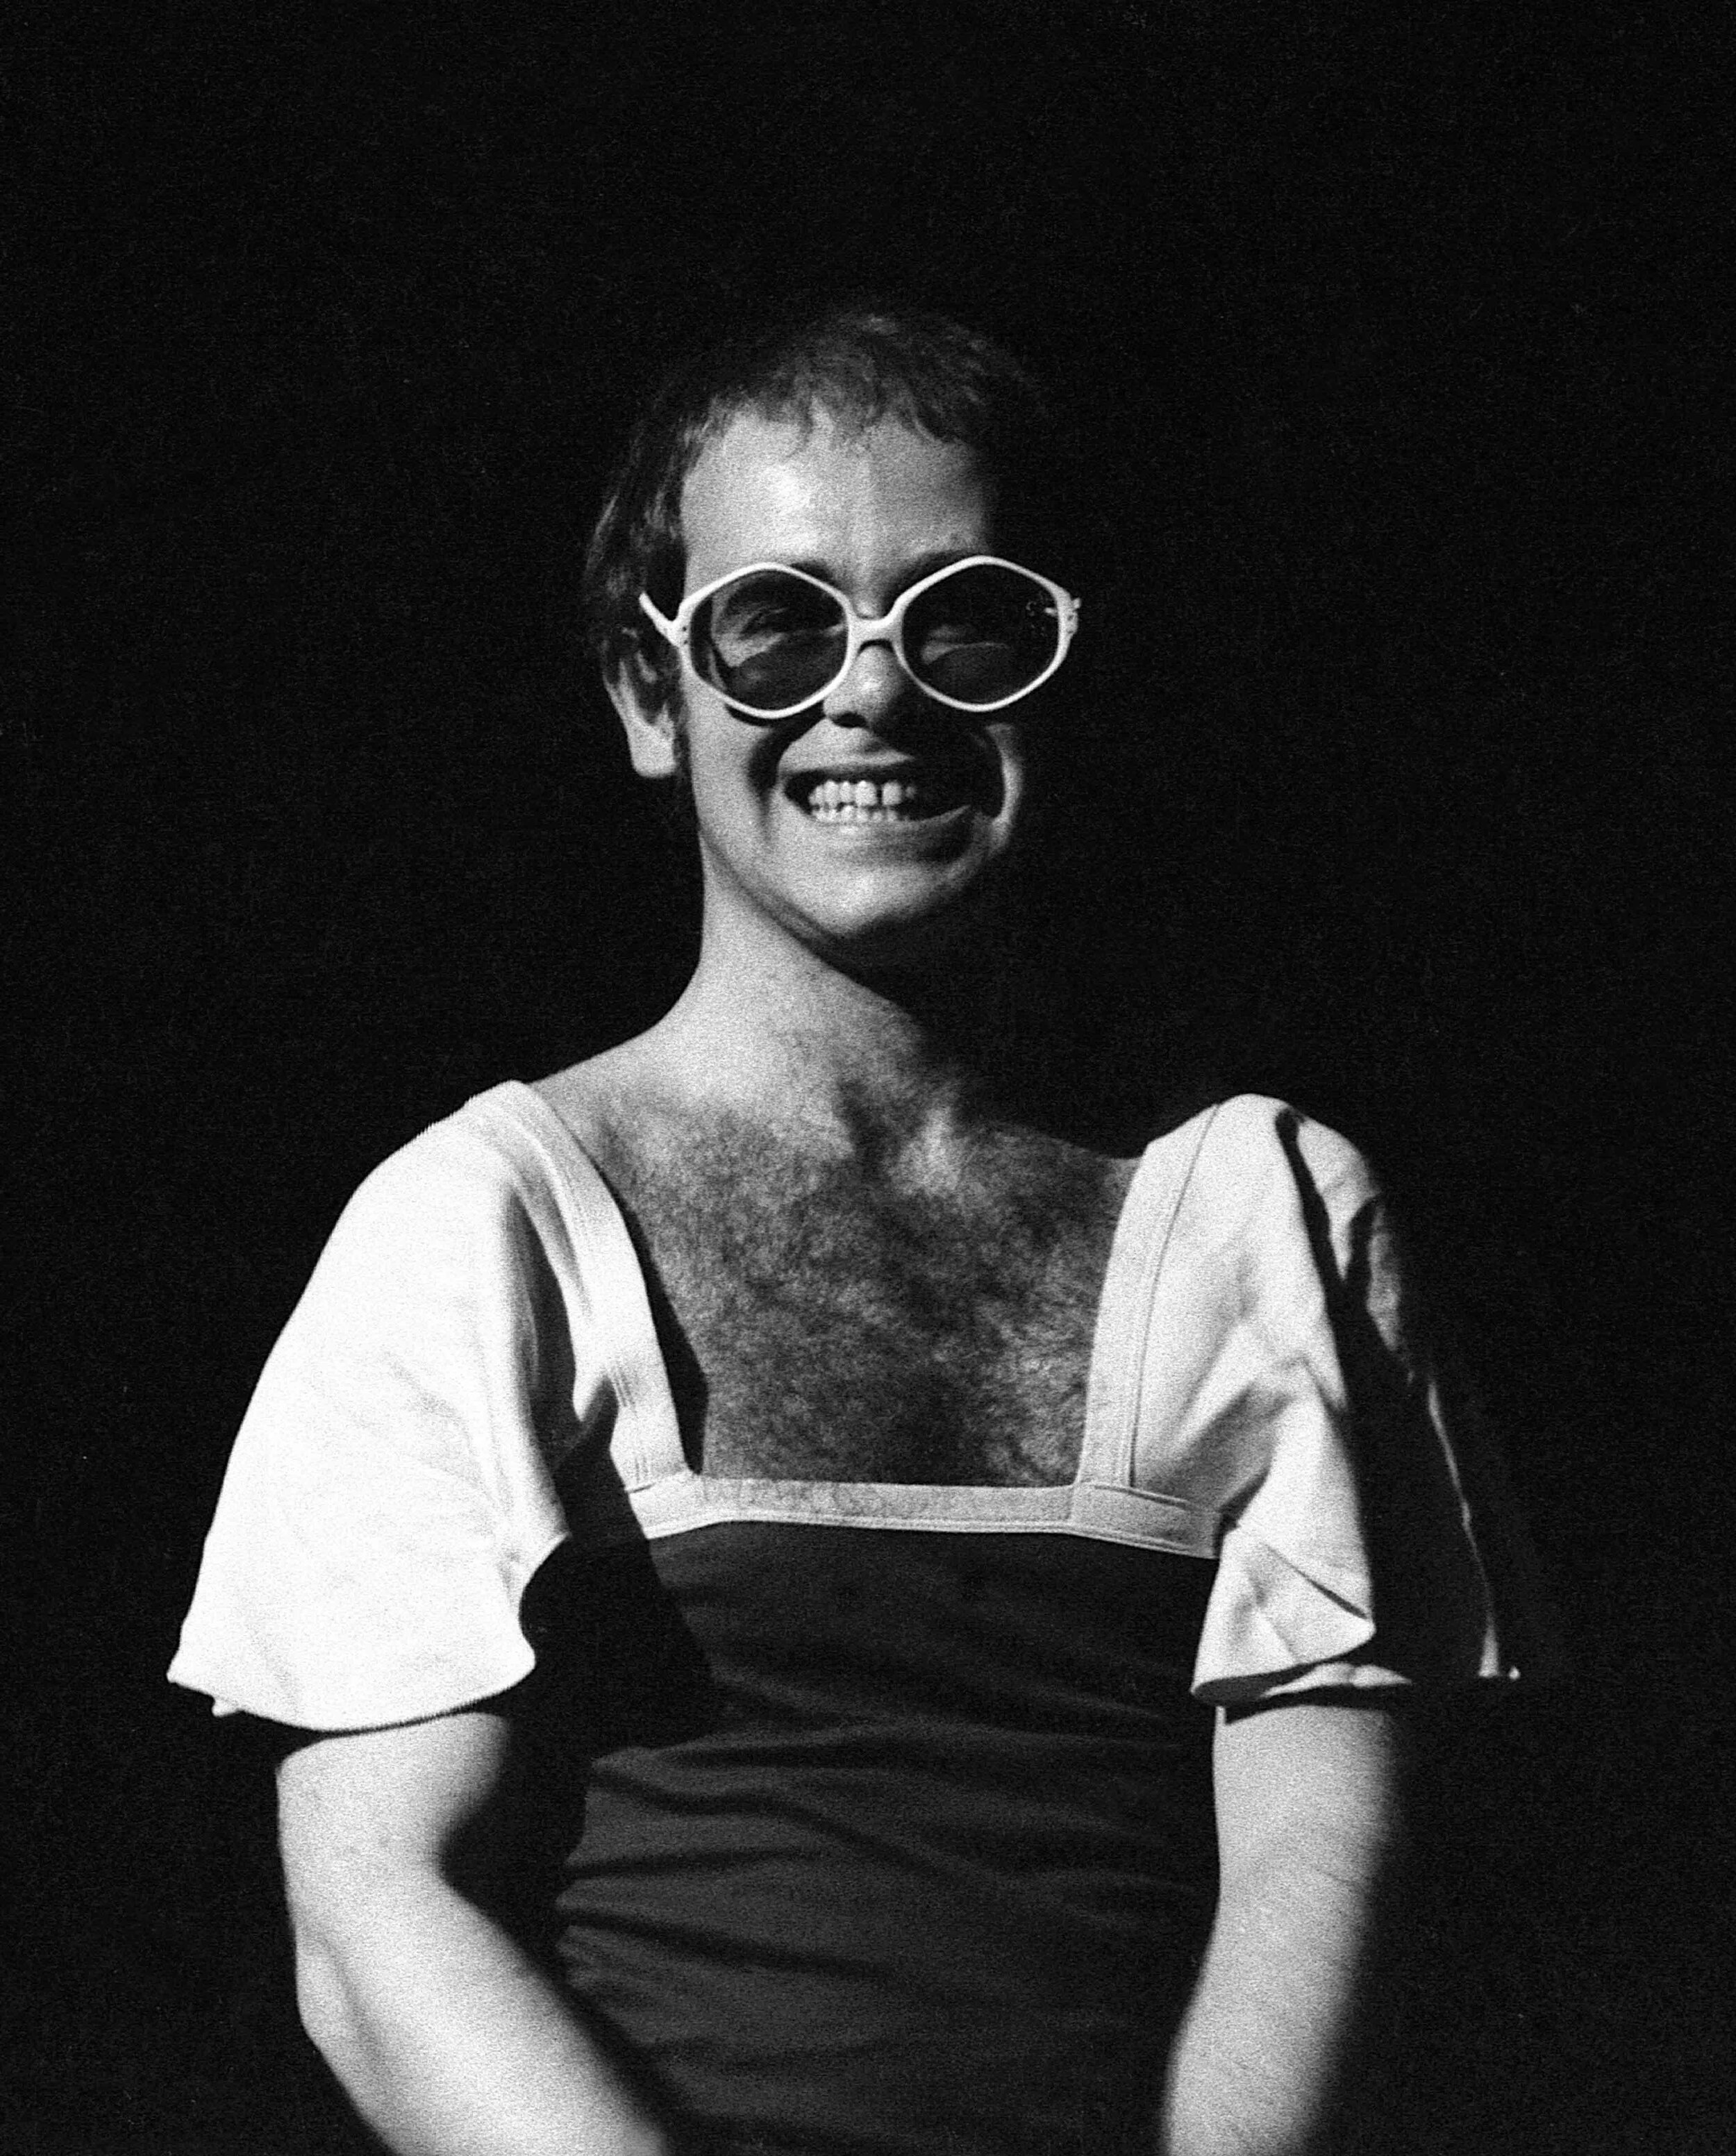 Elton John in an early concert at the Fairfield Halls, Croydon, London.